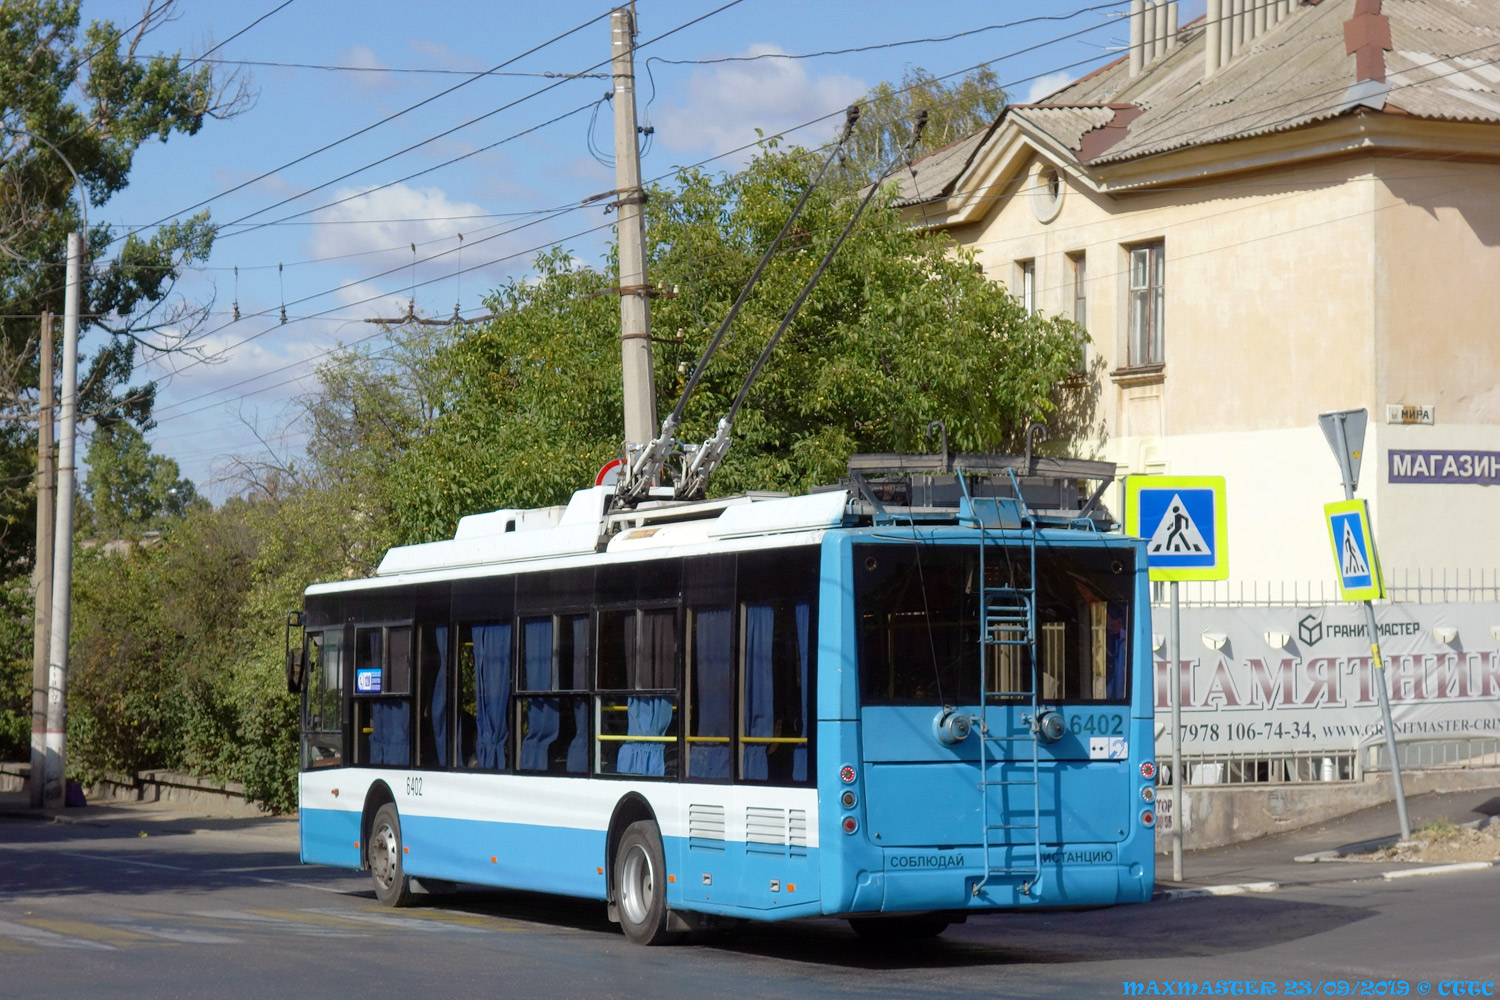 Крымский троллейбус, Богдан Т70115 № 6402